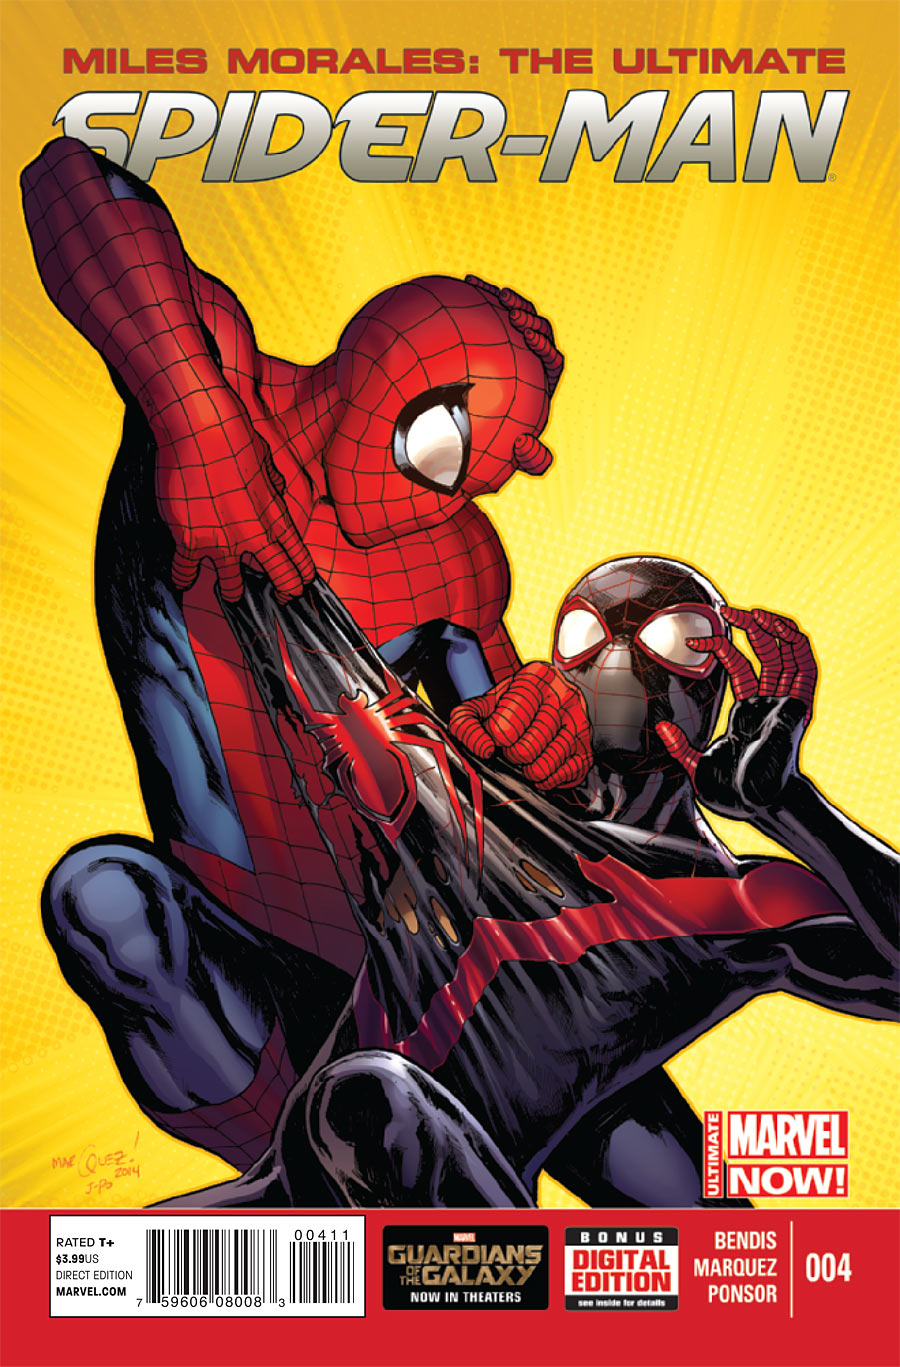 Finale The Amazing Spider-Man 2 ITA - YouTube